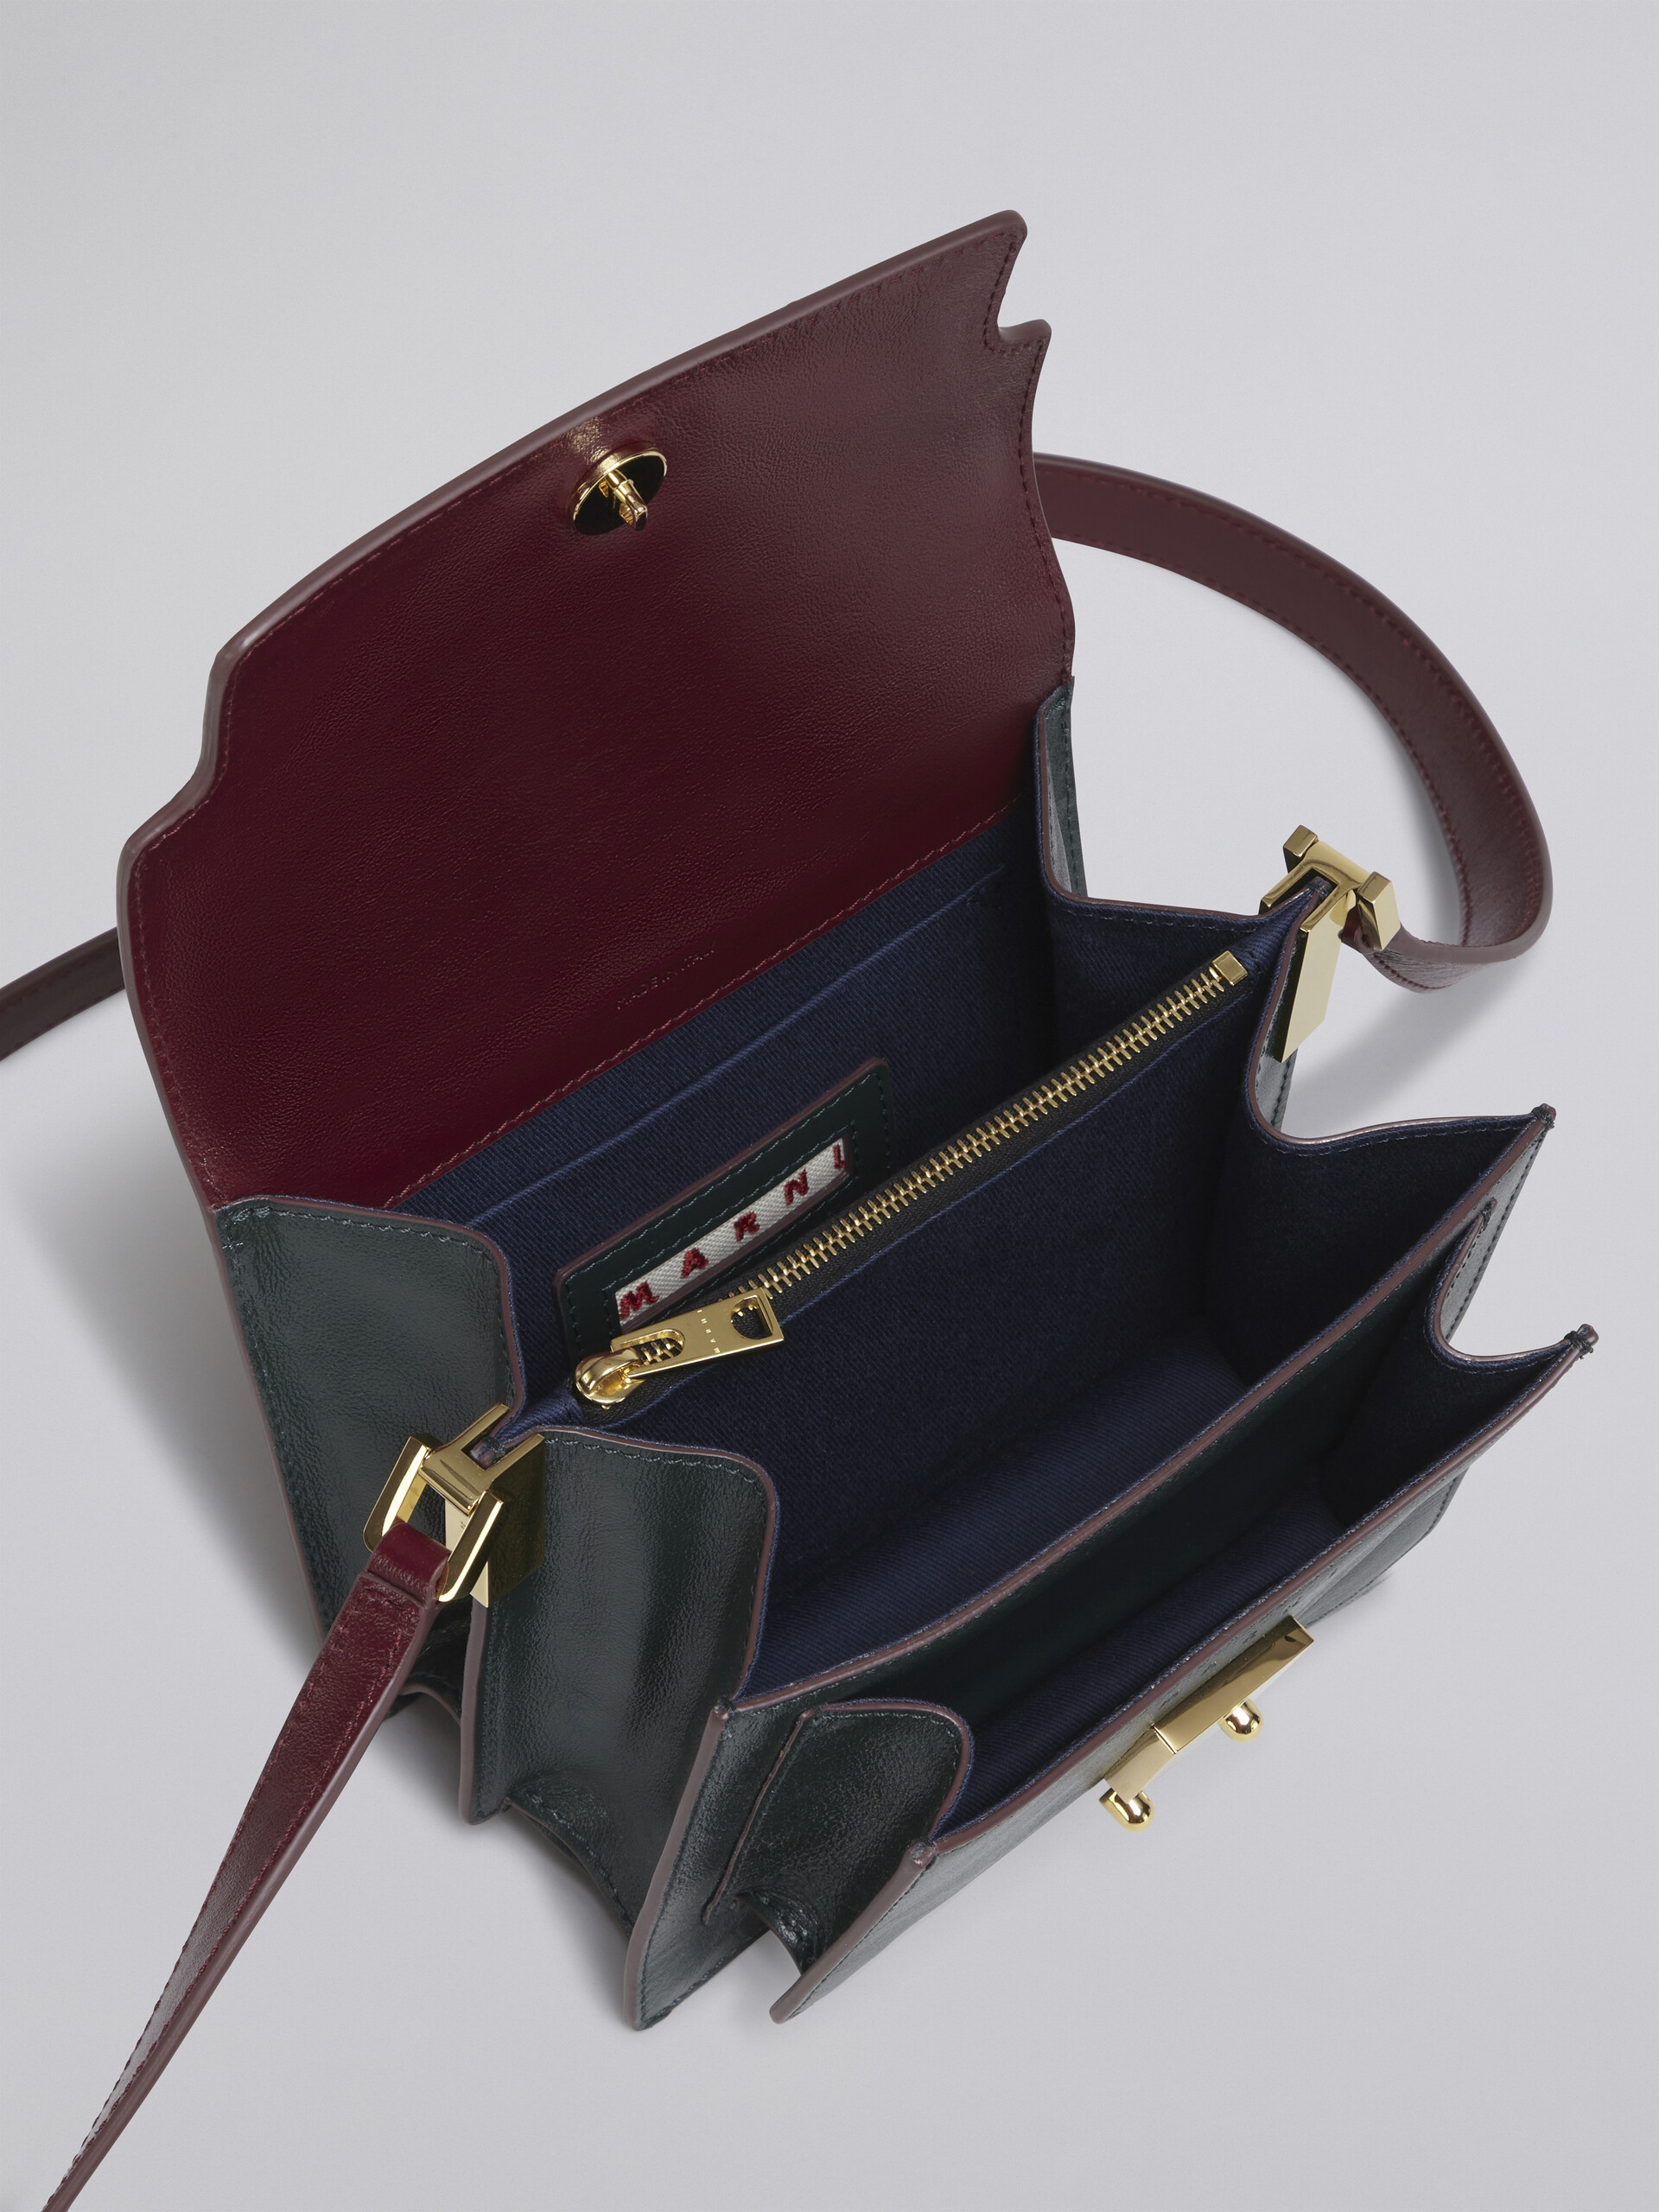 TRUNK SOFT bag in green and burgundy tumbled calf - Shoulder Bag - Image 2